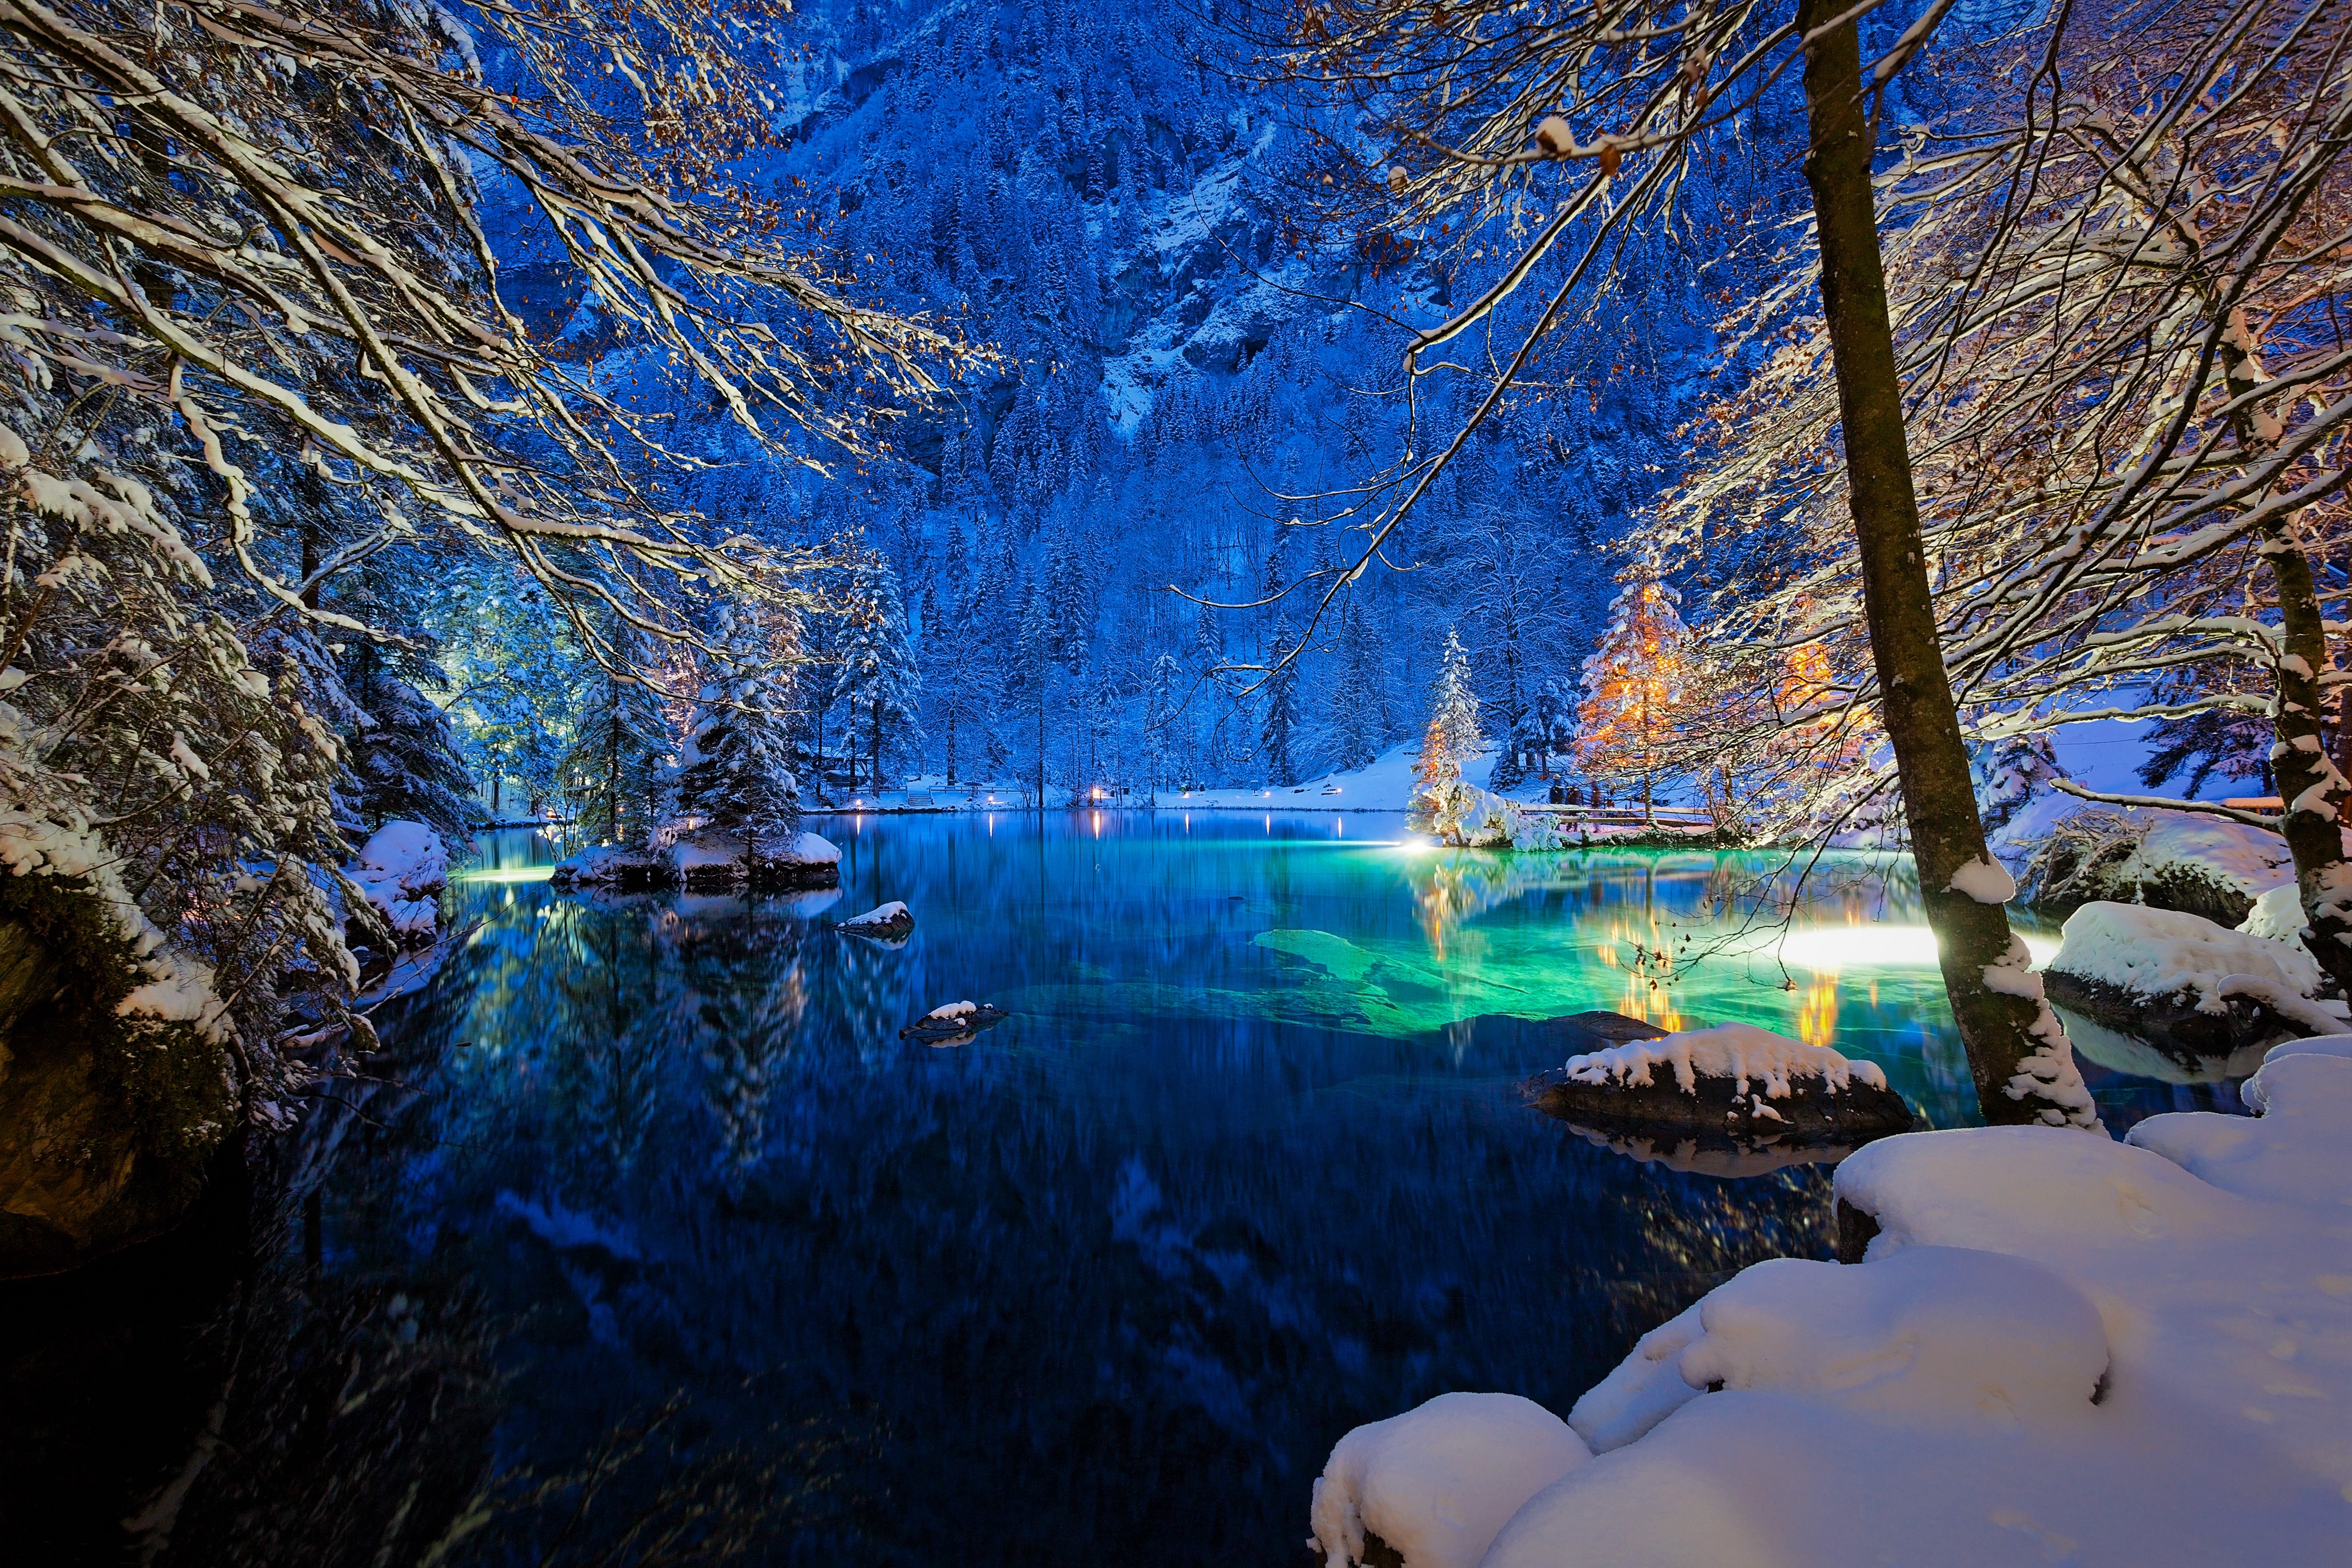 Snowy Trees on Lake in Switzerland